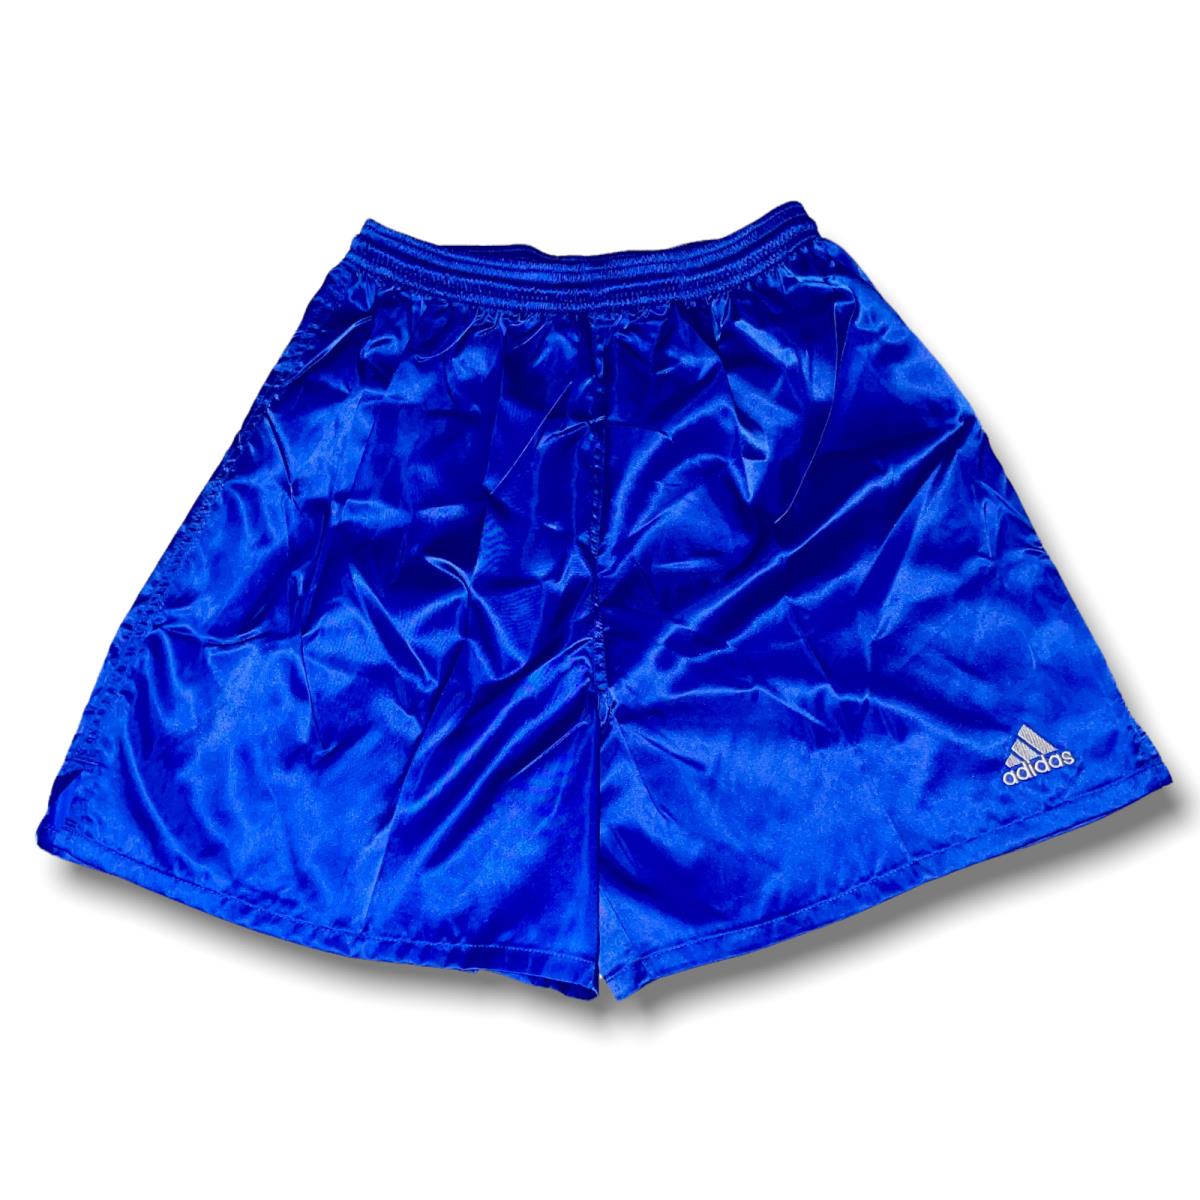 NWT Vintage 80s 90s Adidas Genoa Red Nylon Trefoil Soccer Silk Shorts Size M Kleding Gender-neutrale kleding volwassenen Shorts 